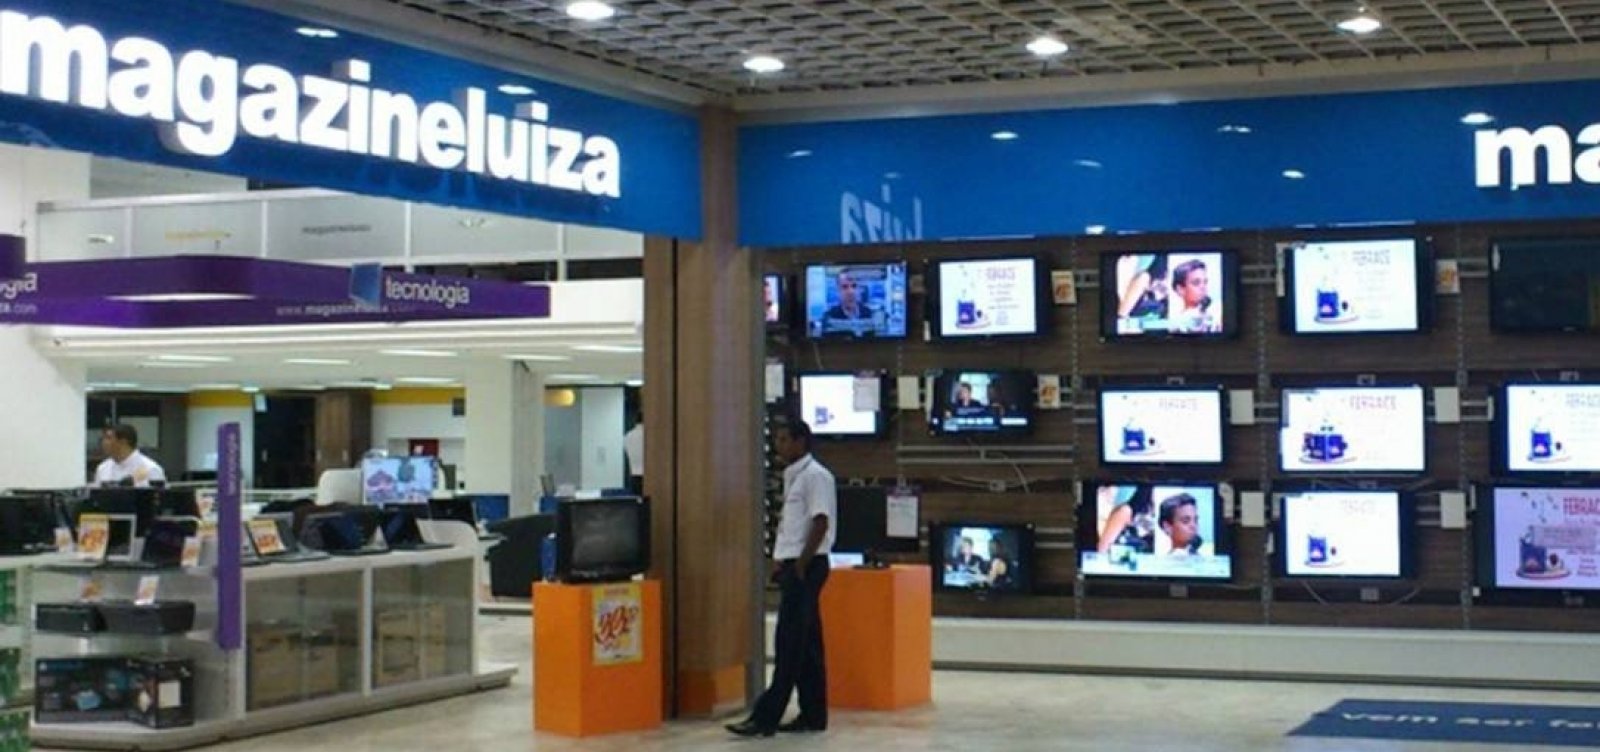 magazine luiza anuncia compra da netshoes